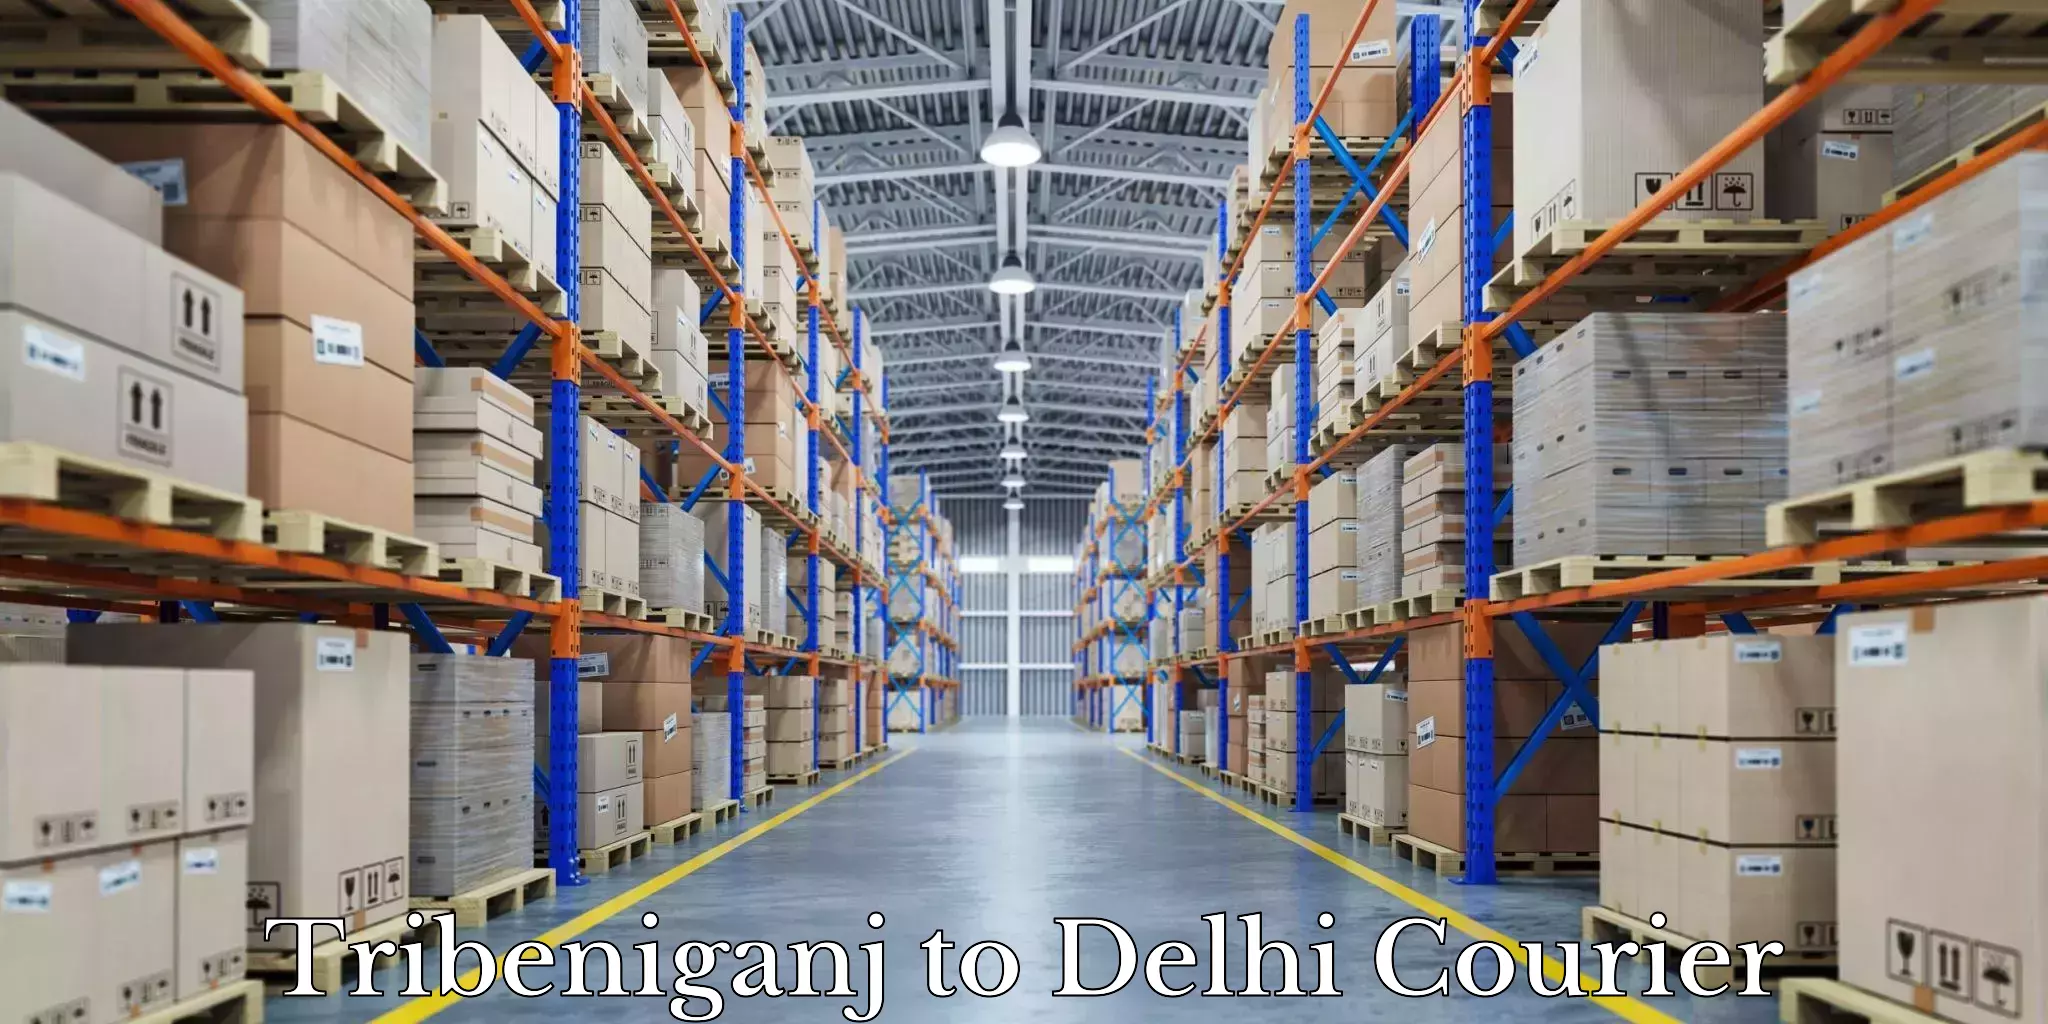 Customized moving solutions Tribeniganj to University of Delhi